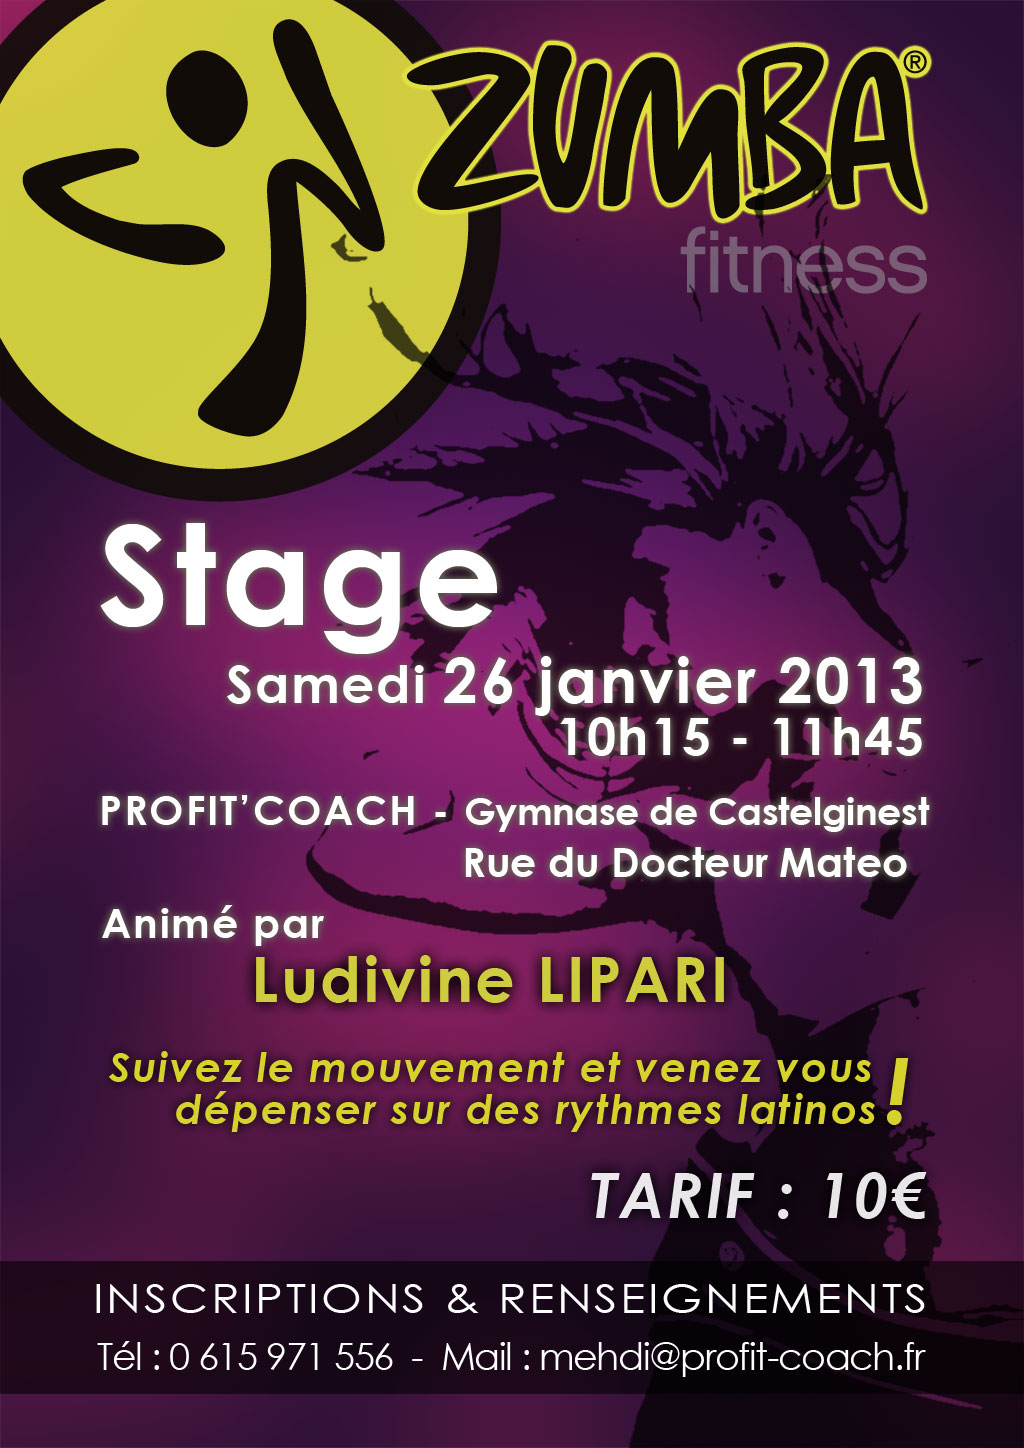 stage zumba le samedi 26 janvier 2013 a castelginest | Cours Zumba ...